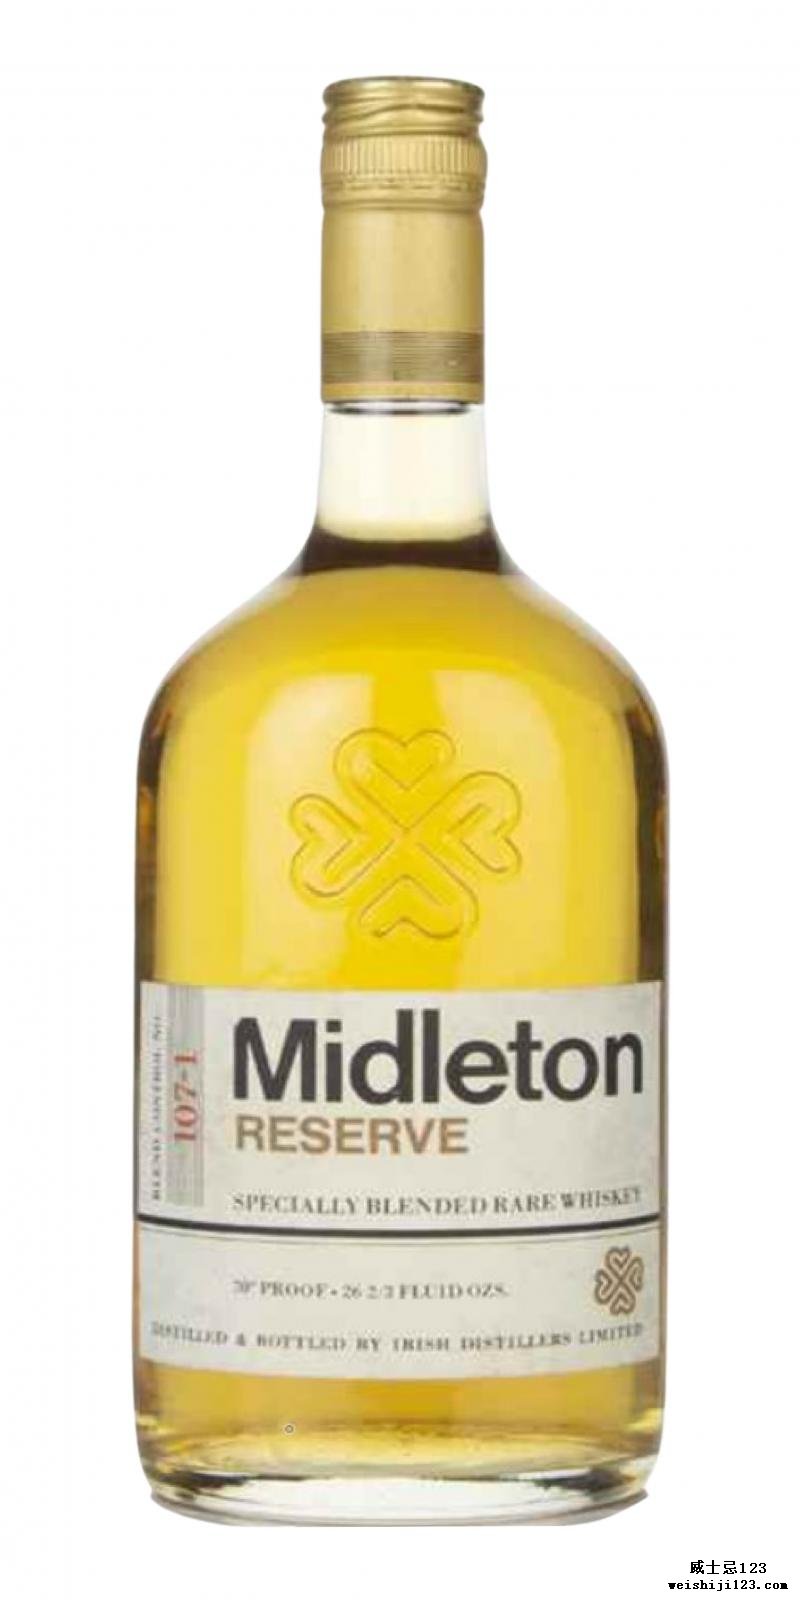 Midleton Reserve